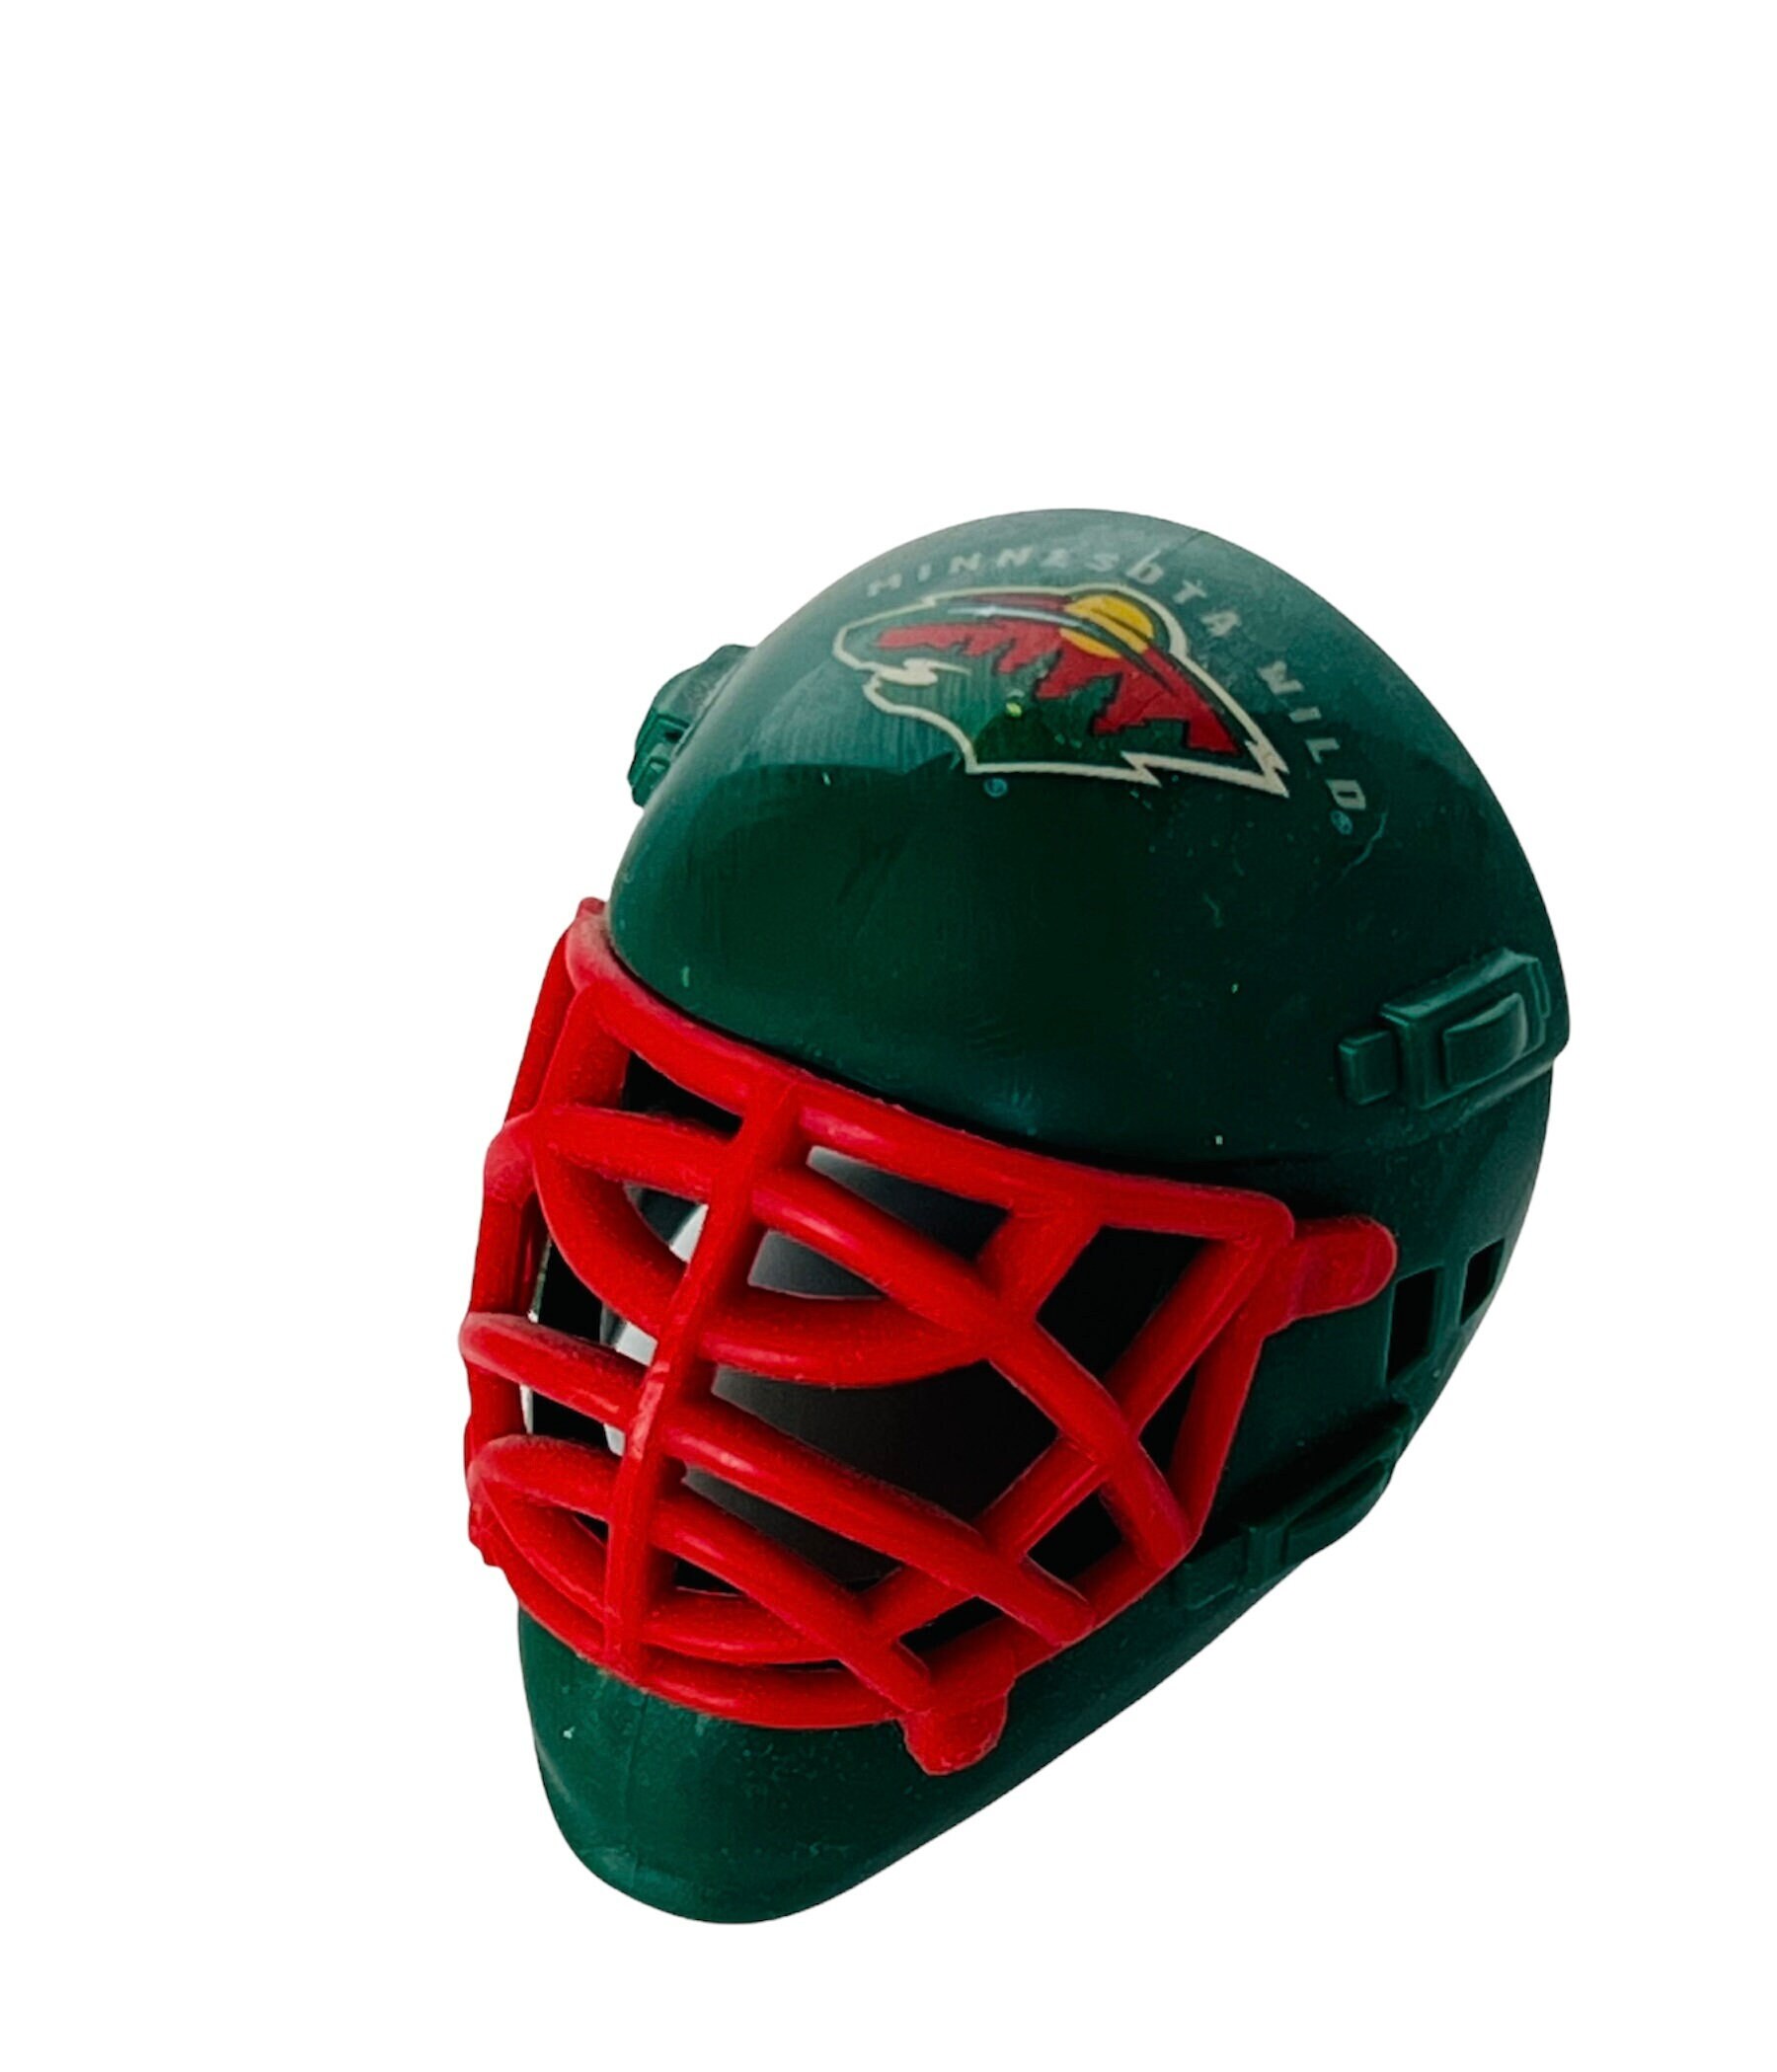 Minnesota Wild Franklin Mini Goalie Mask